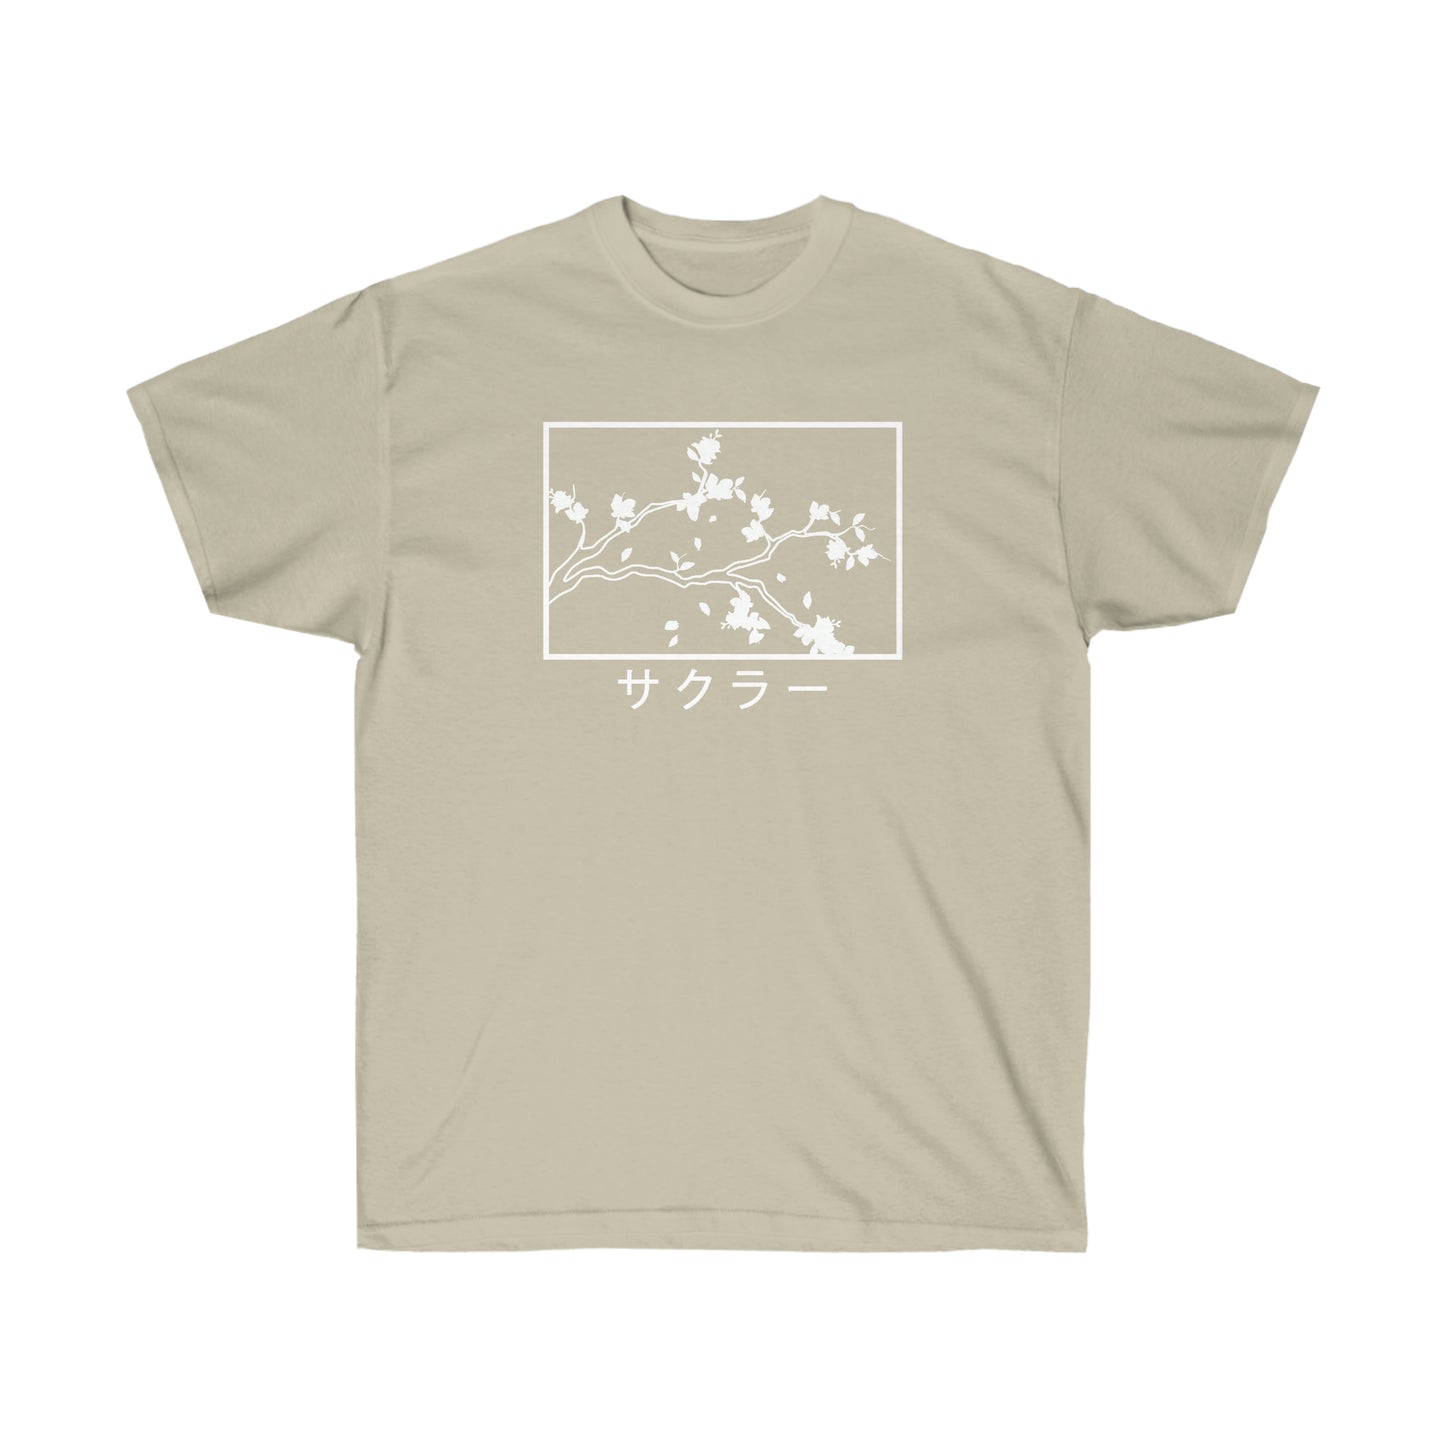 Sakura aesthetic shirt minimal minimalist Japan t-shirt